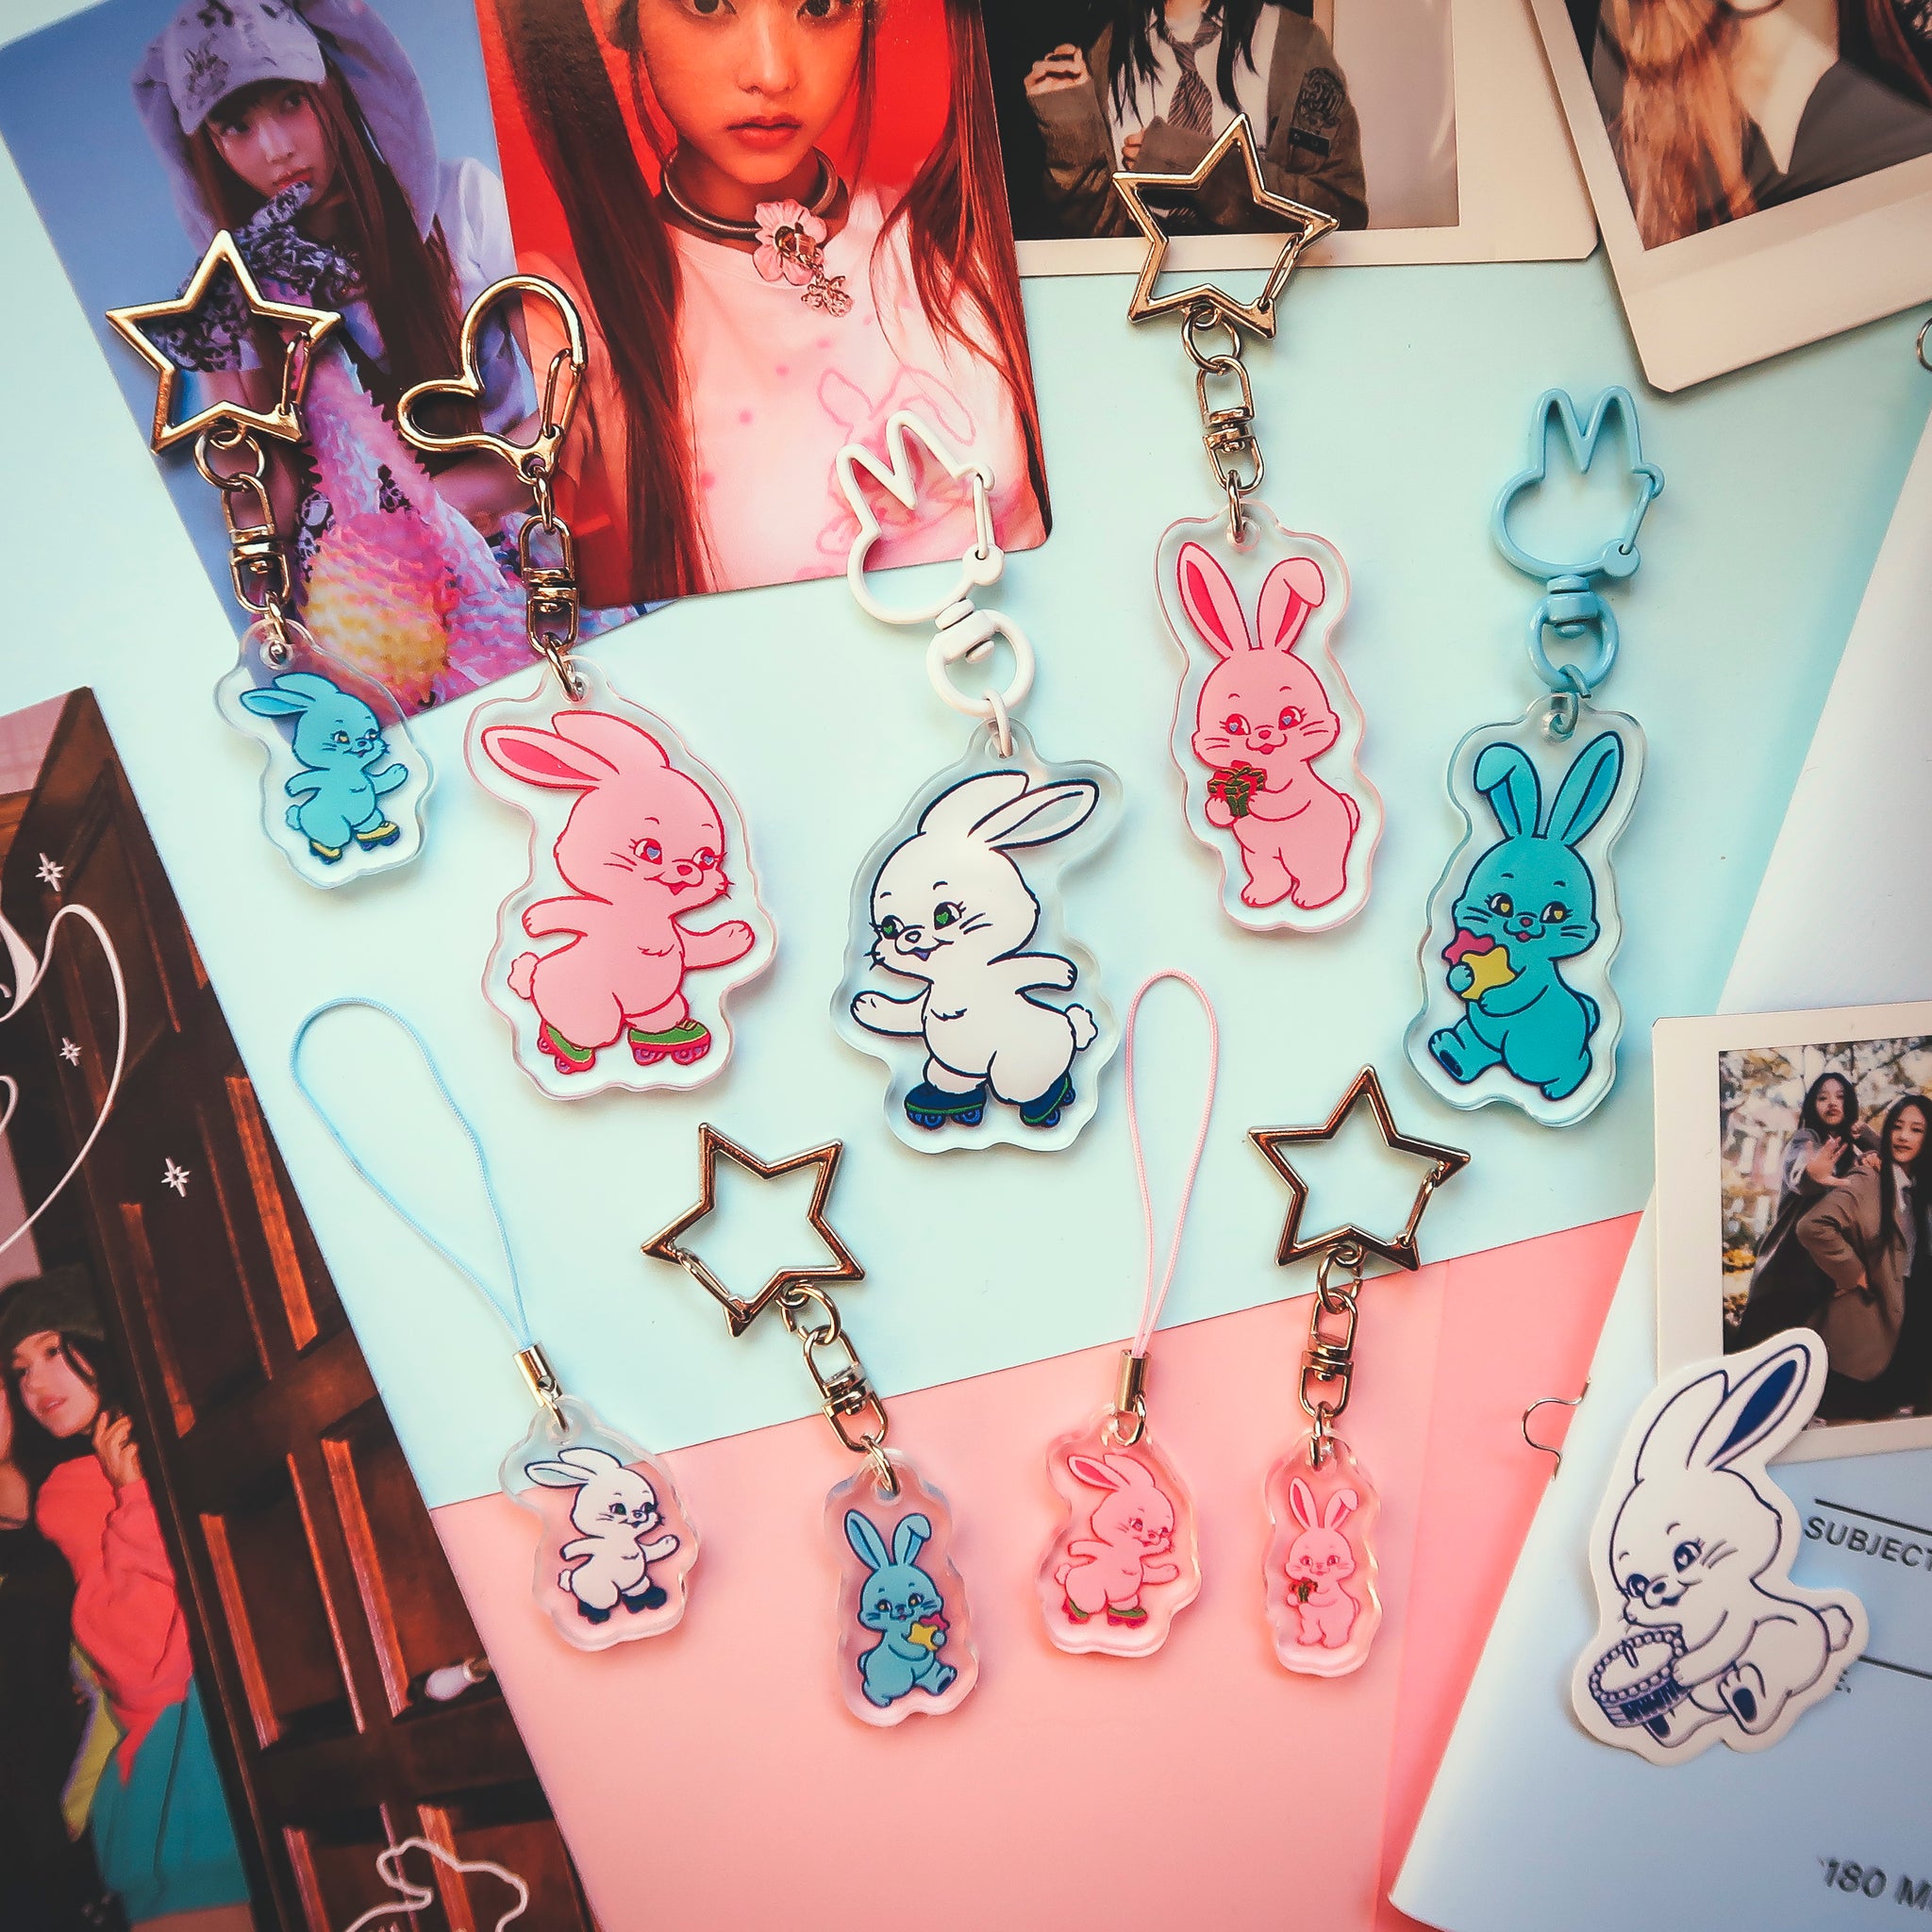 NewJeans Tokki/Bunny Mascot Glossy Acrylic Key Chain or Phone Strap (7 Designs)